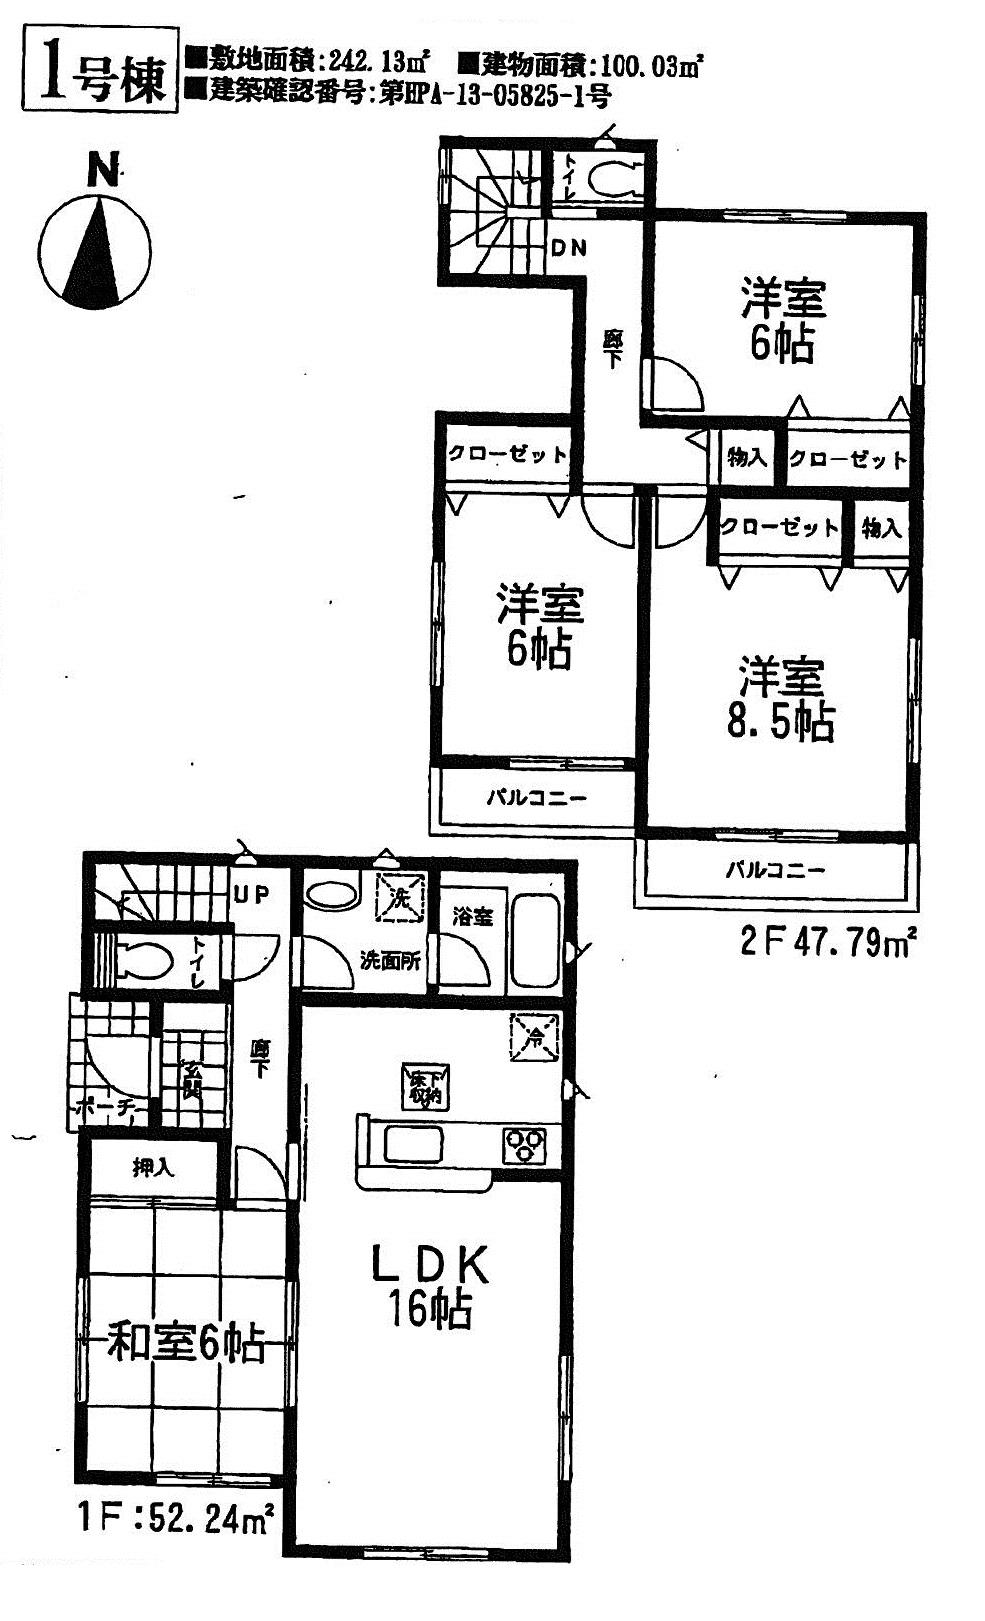 Floor plan. (1 Building), Price 19,800,000 yen, 4LDK, Land area 242.13 sq m , Building area 100.03 sq m